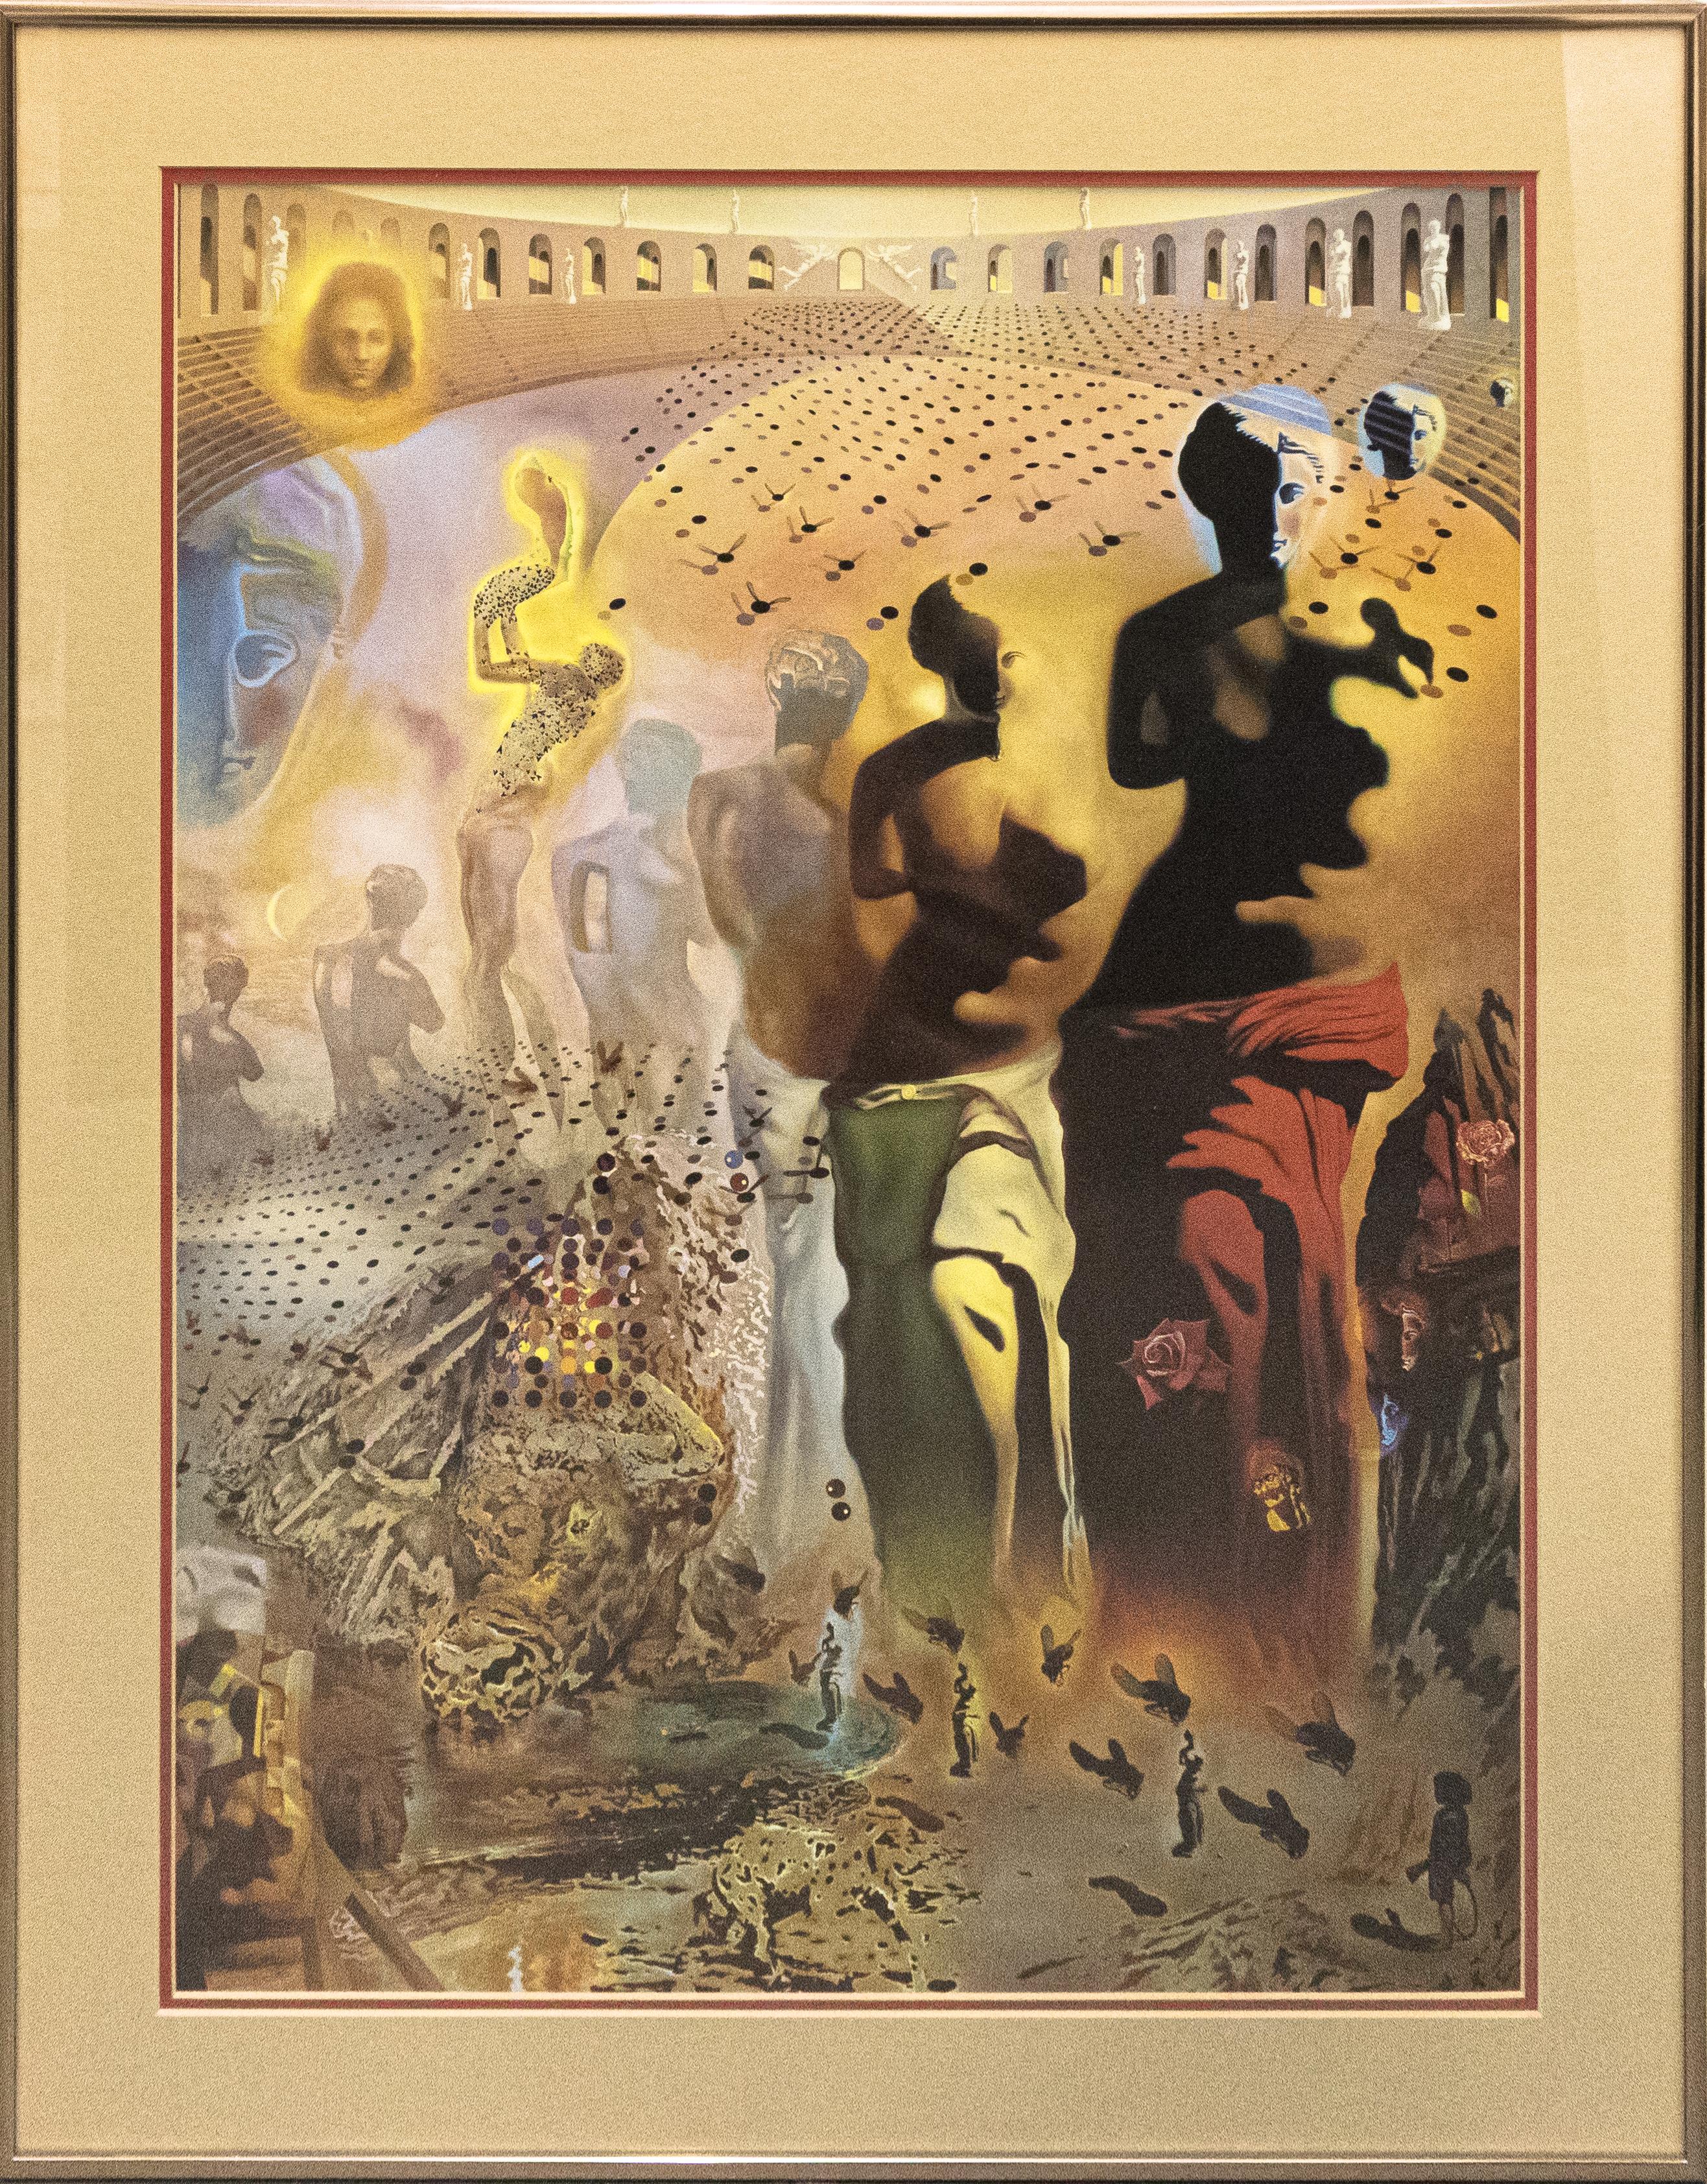 "The Hallucinogenic Toreador" Framed Lithograph After Salvador Dali  - Print by (after) Salvador Dali